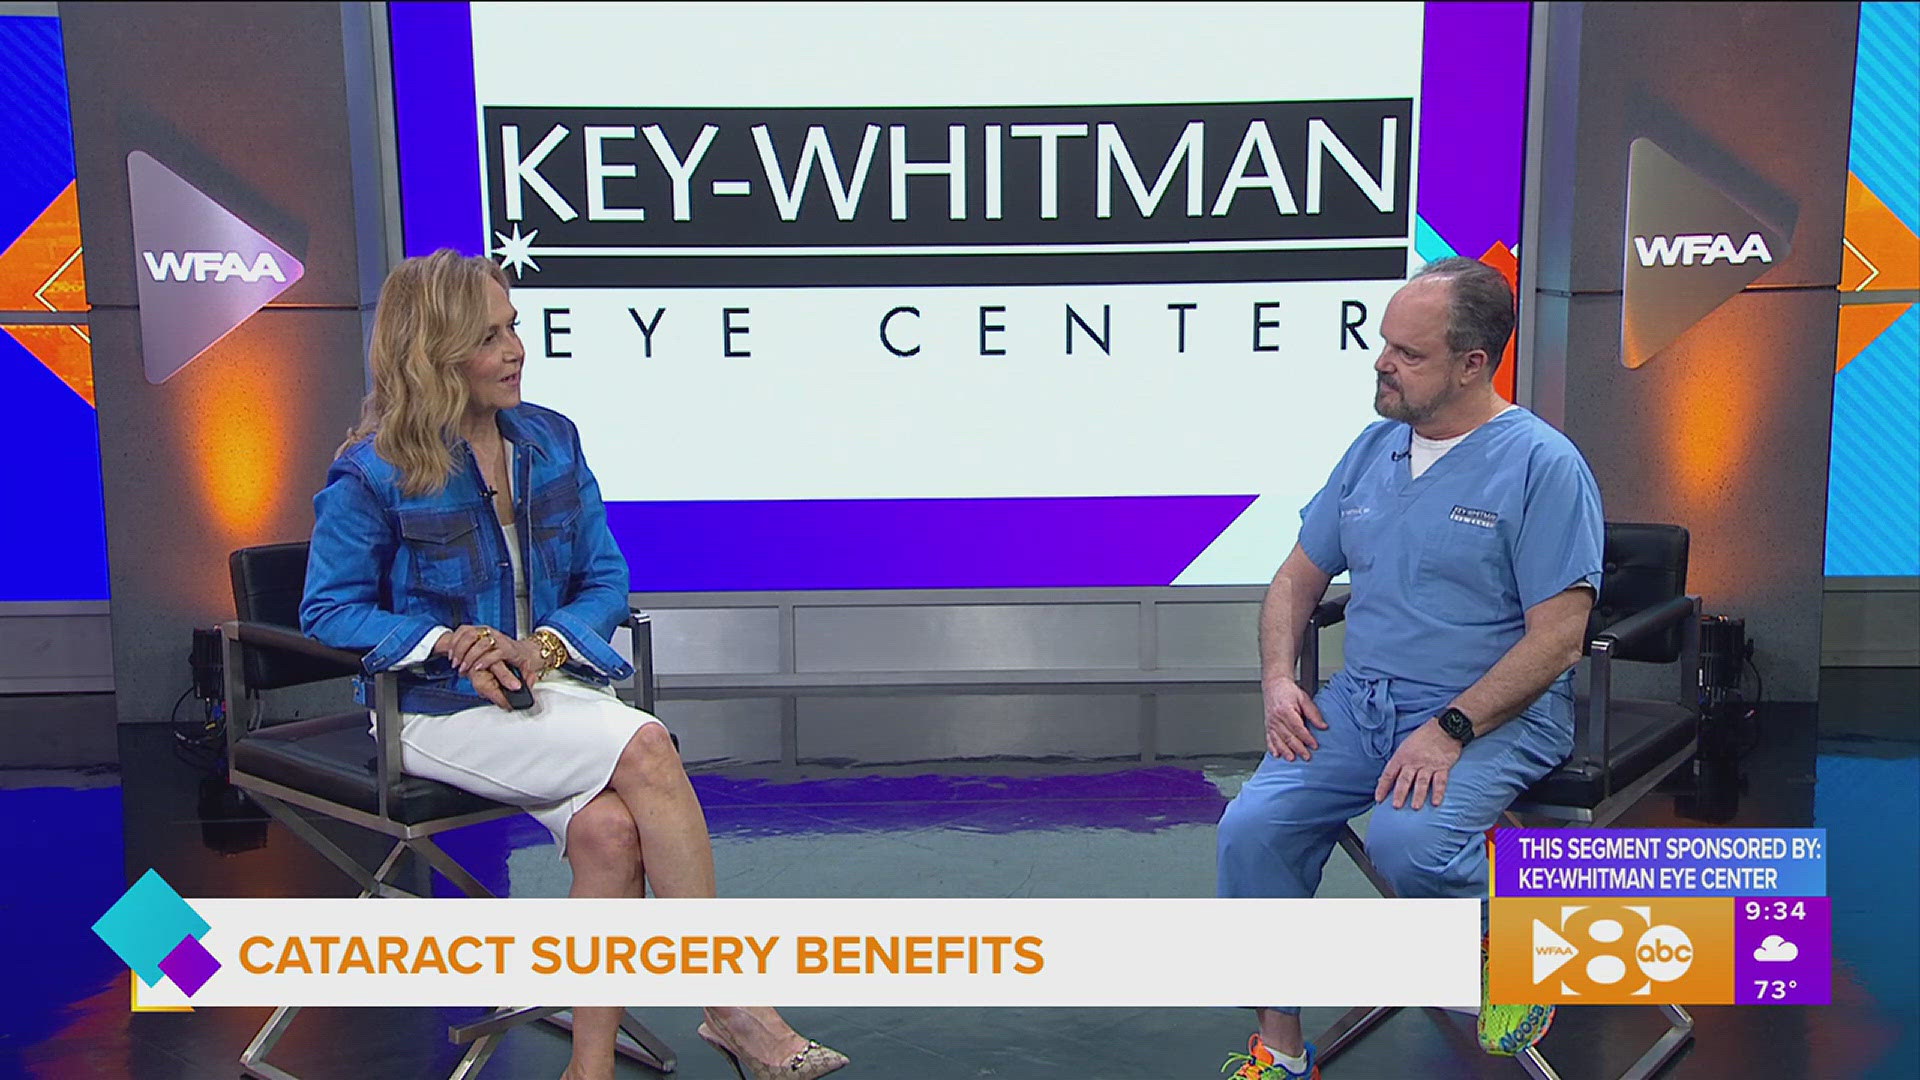 This segment is sponsored by: Key-Whitman Eye Center